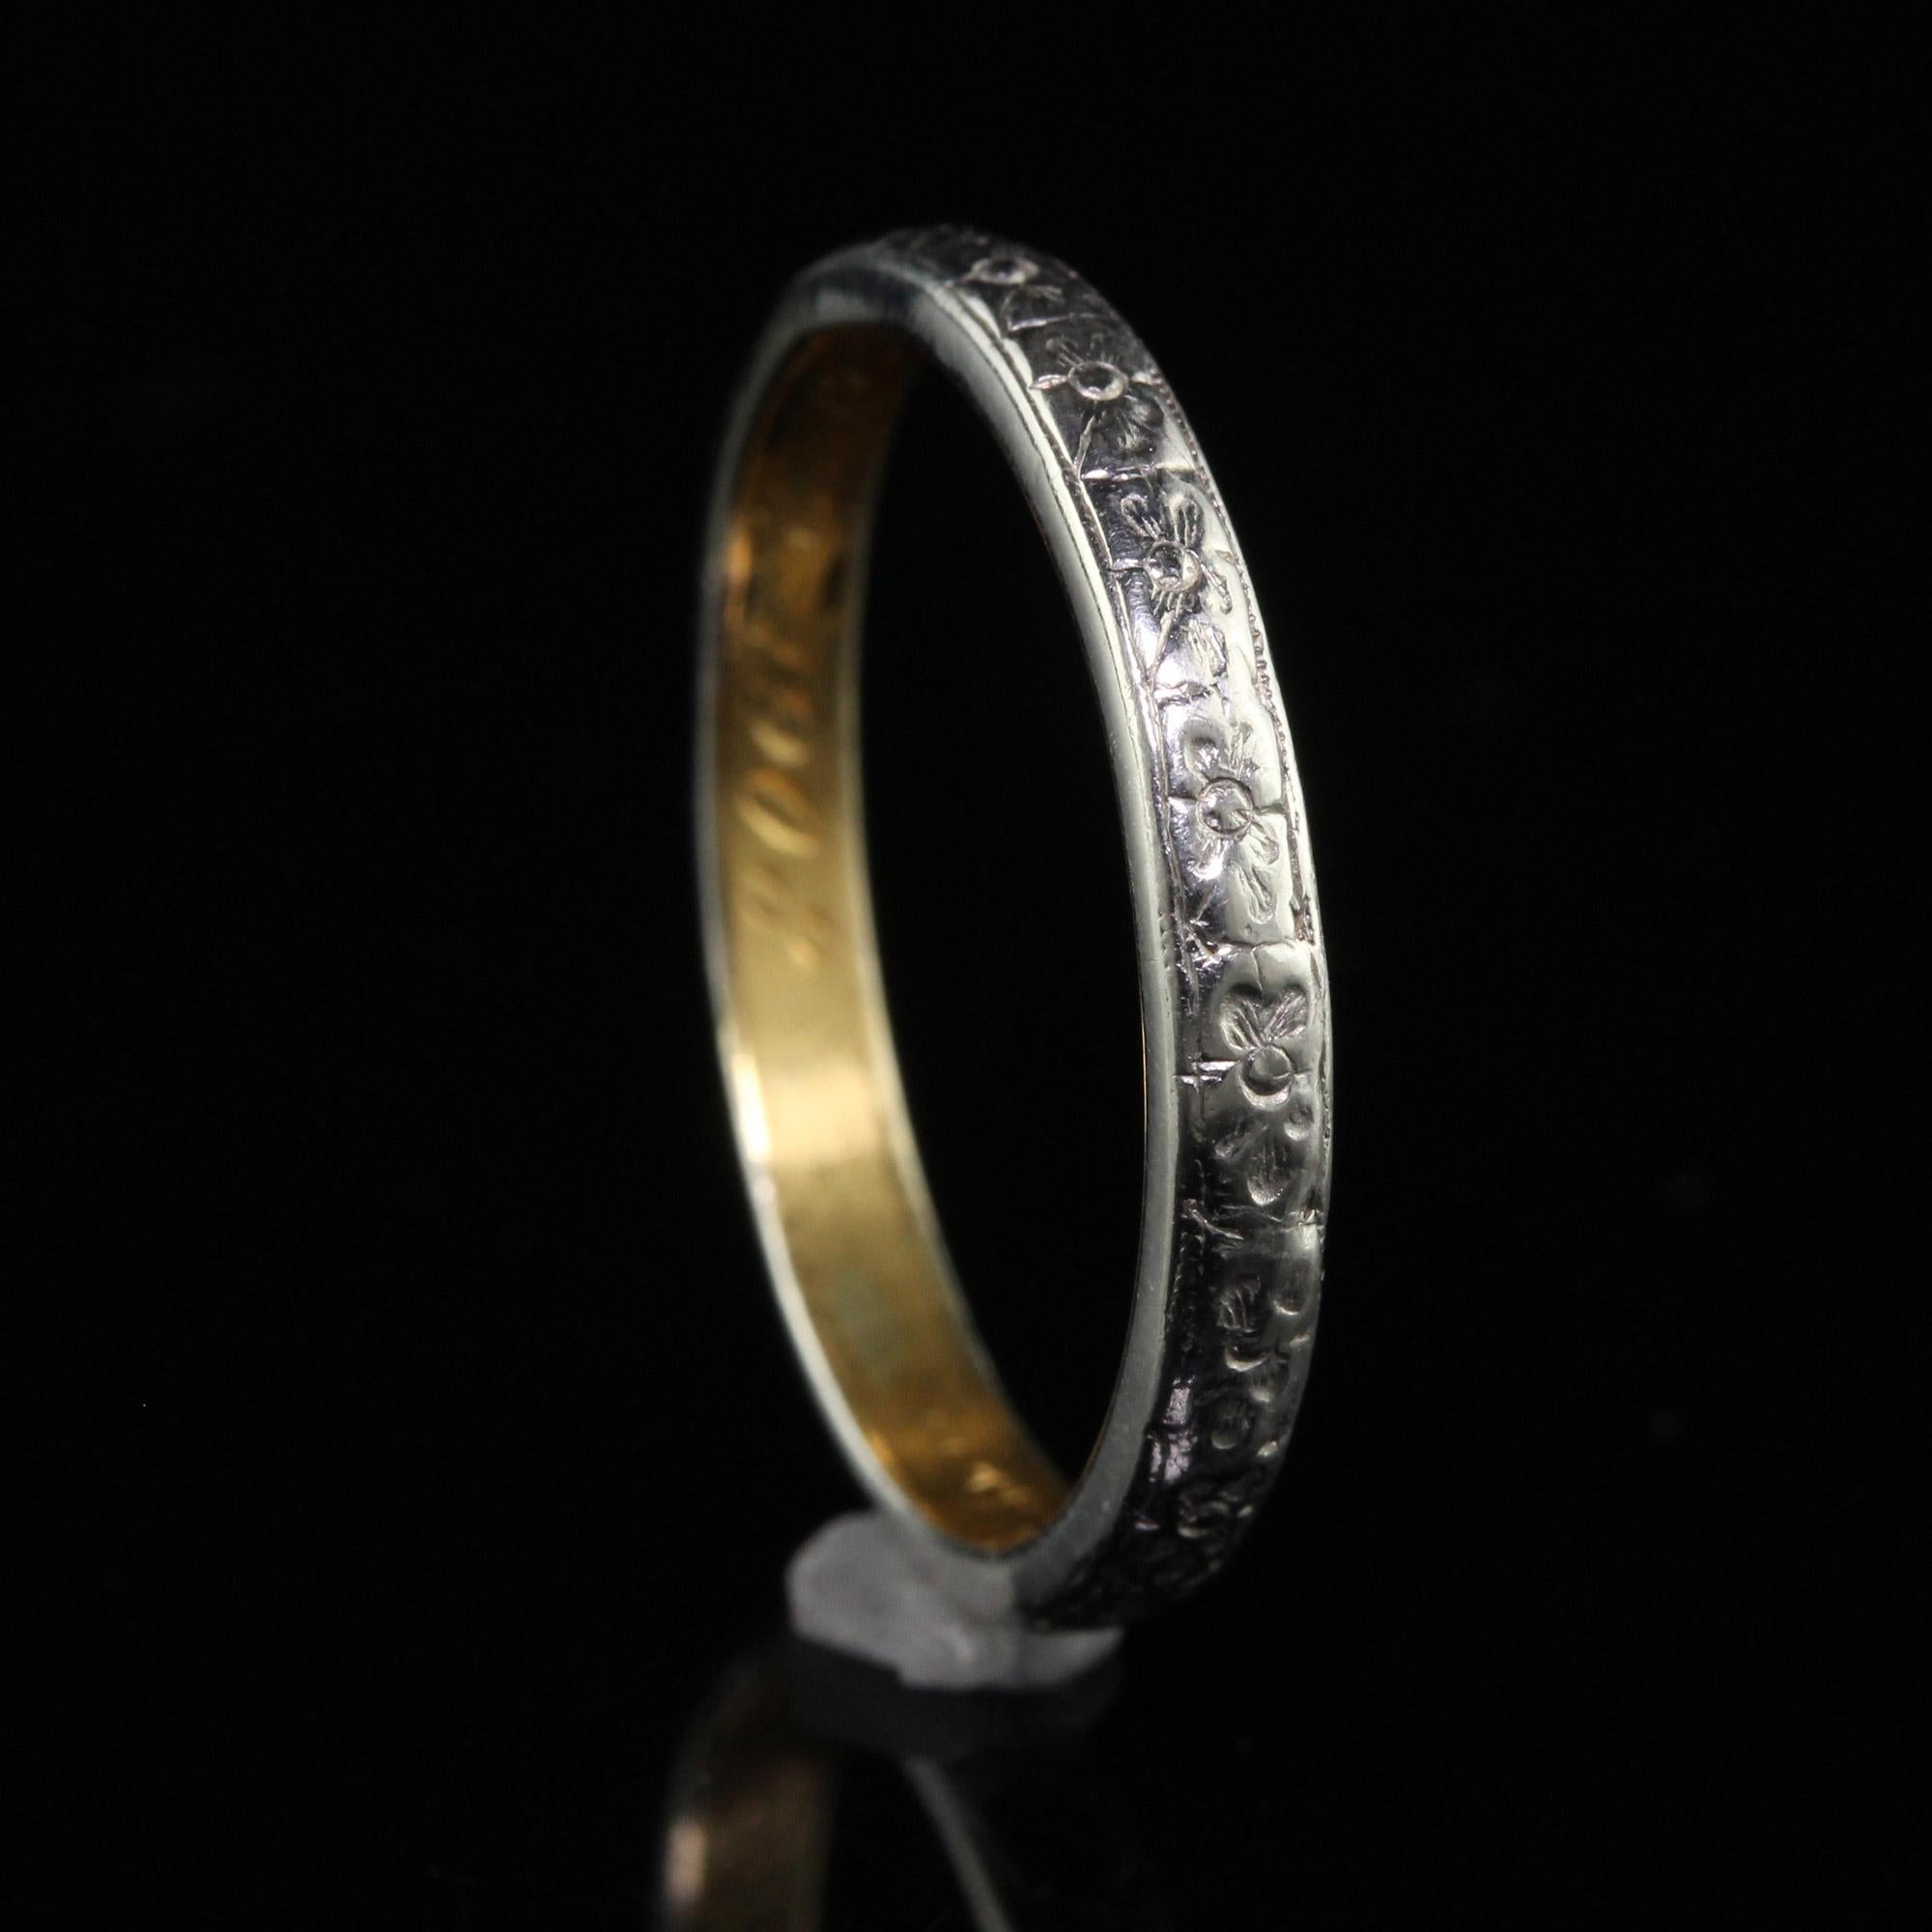 Antique Edwardian Platinum 18k Gold Tiffany and Co Engraved Wedding Band For Sale 1